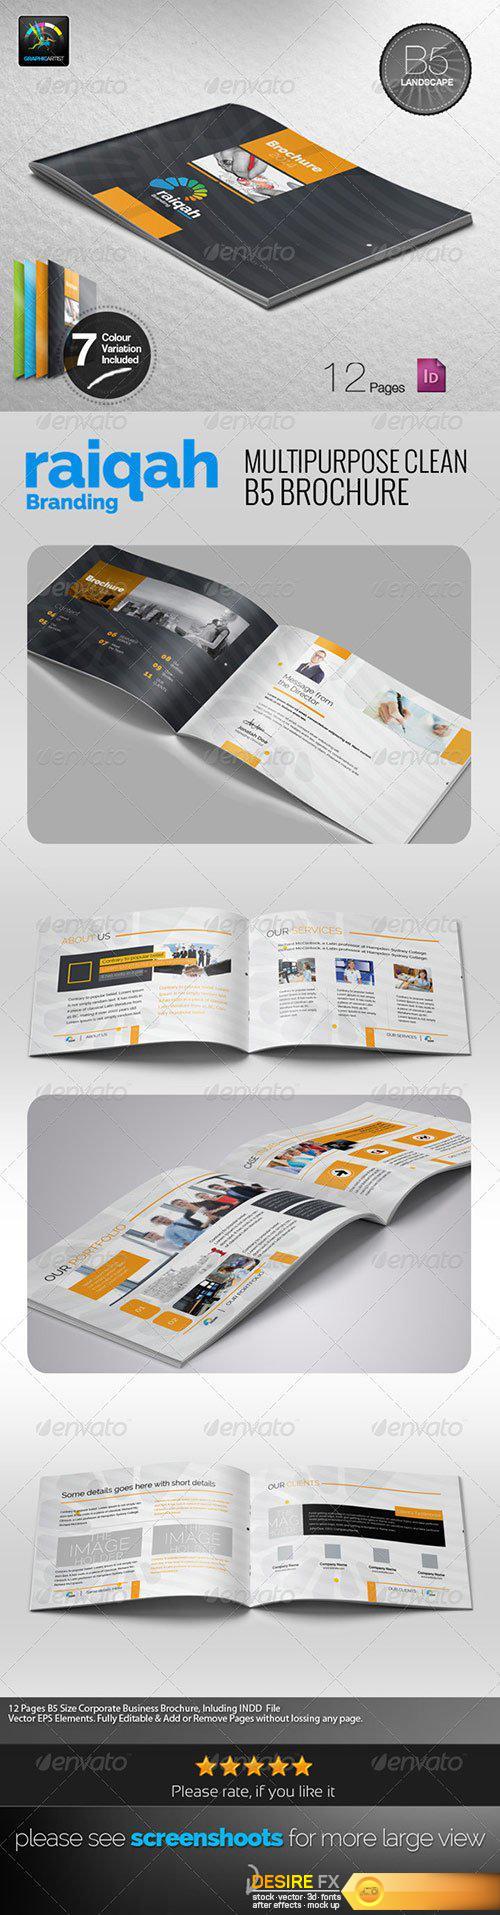 Graphicriver - Raiqah Multipurpose B5 Brochure 7638414